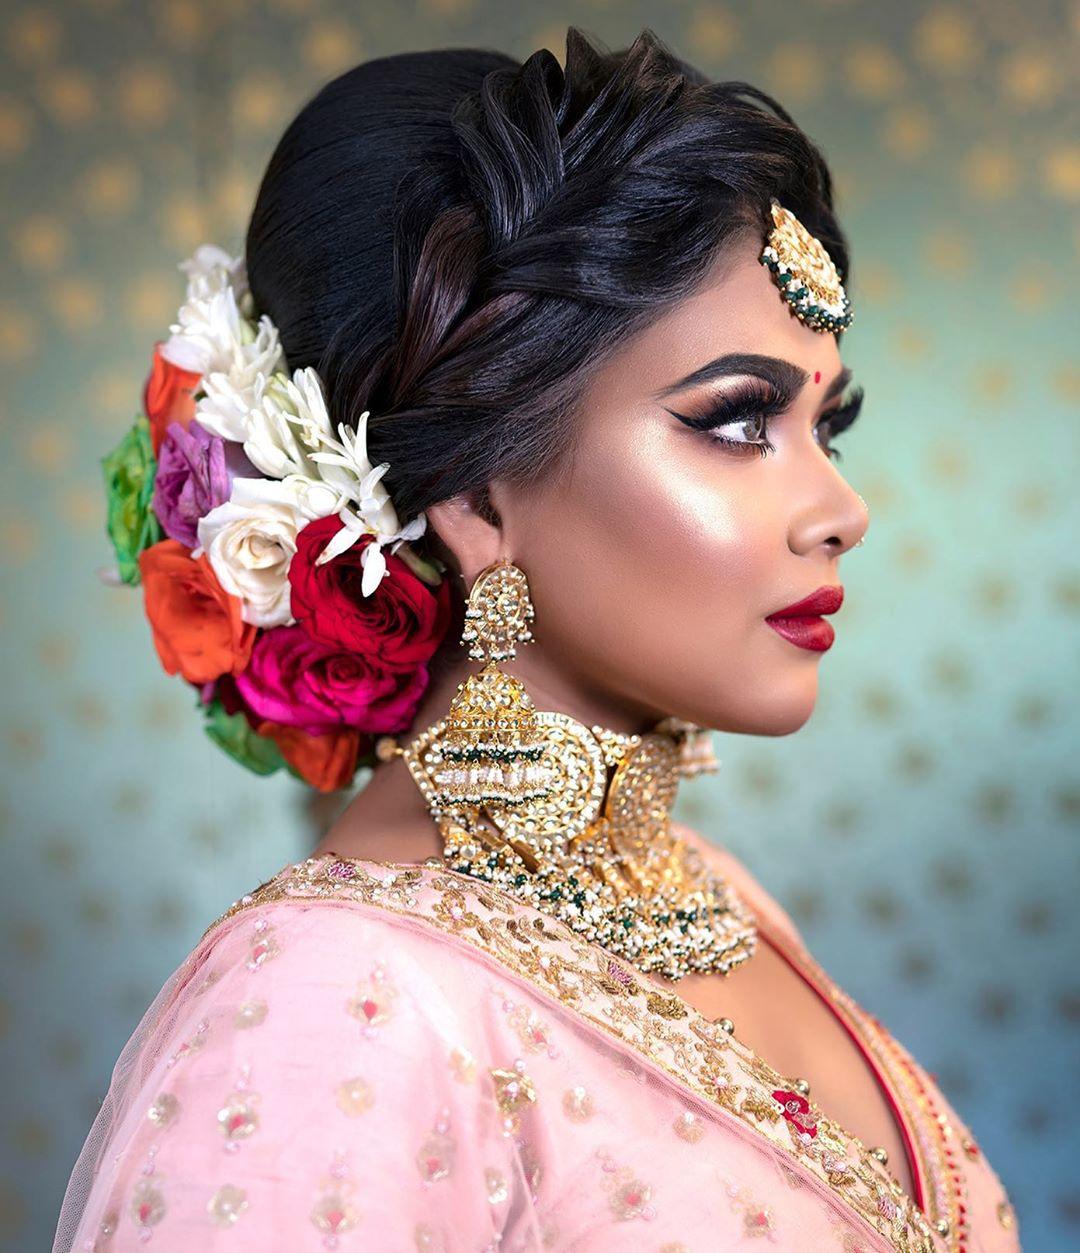 Premium Photo | Bridal hair style in wedding ceremony